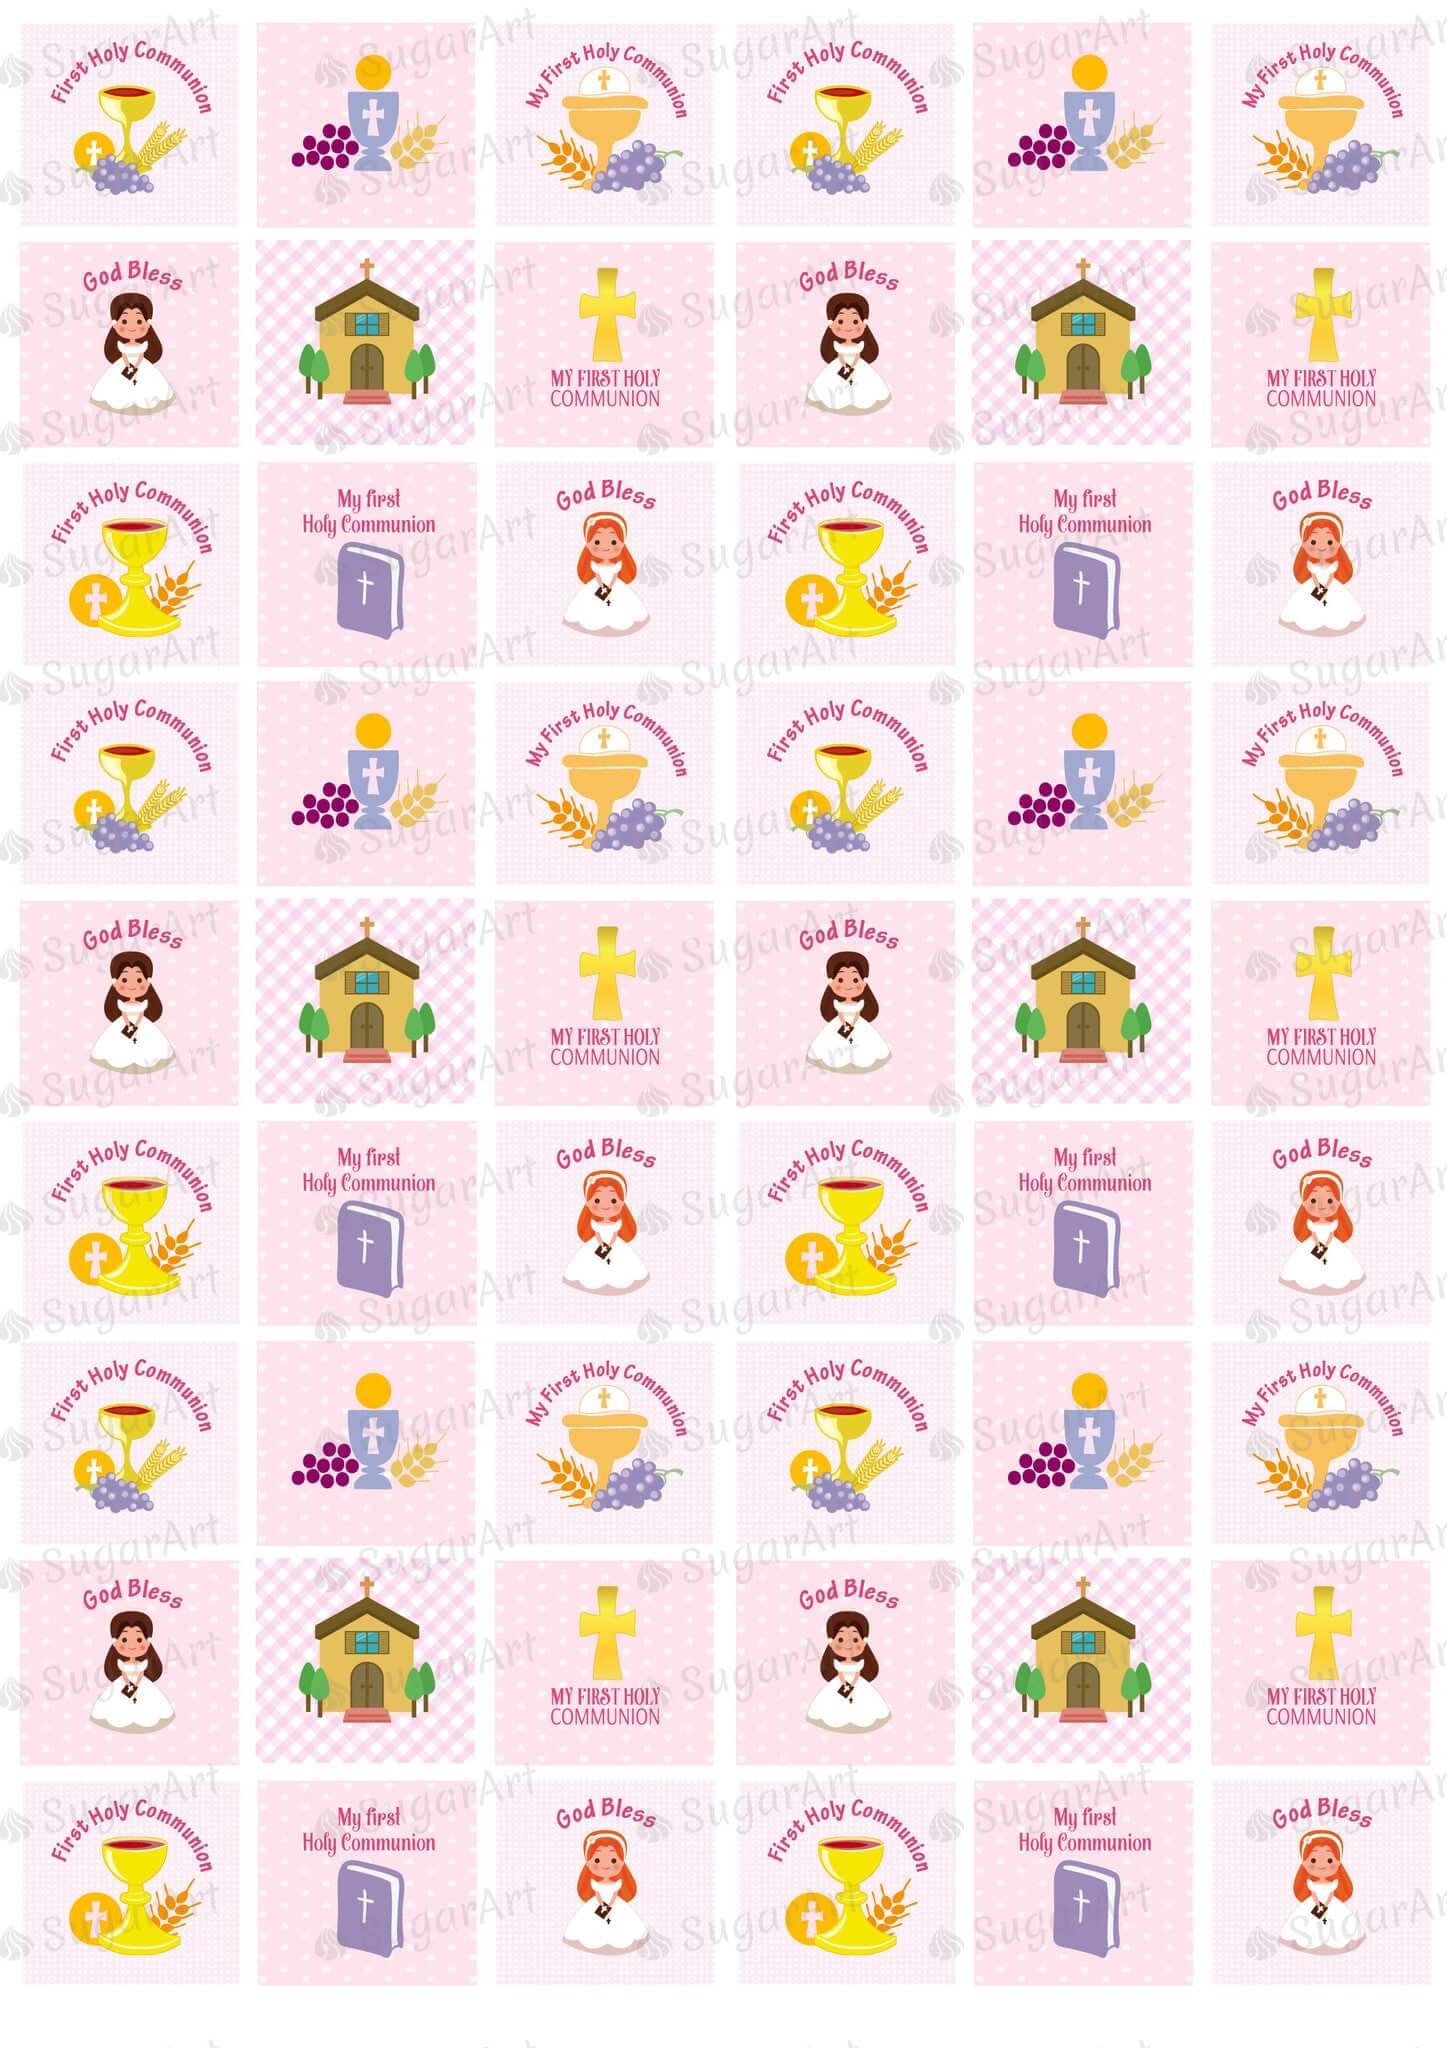 First Holy Communion, G-d Bless, Girl - ESA003-Sugar Stamp sheets-Sugar Art